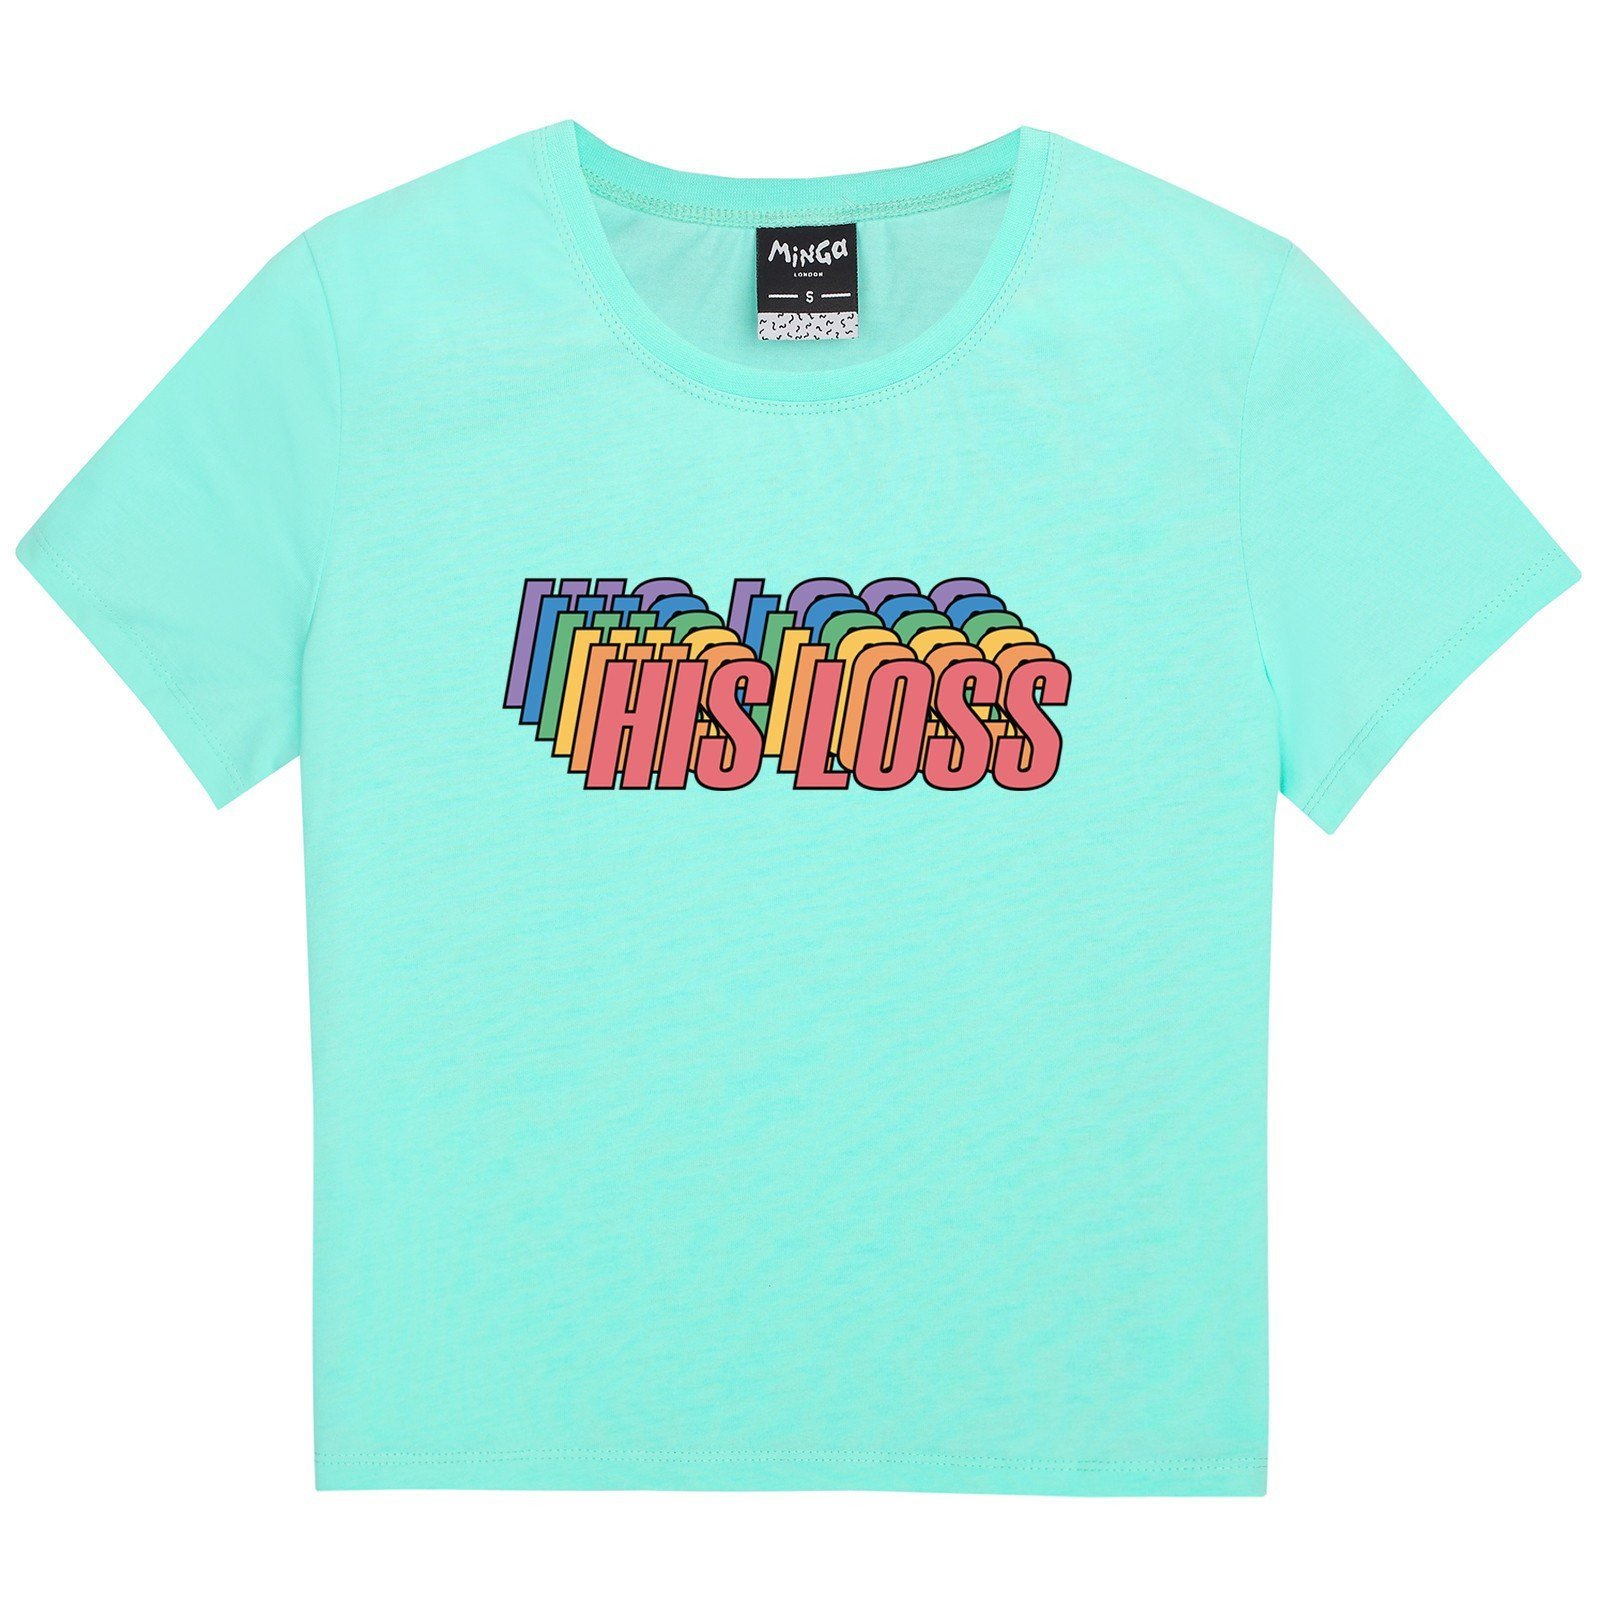 Minga_London_Hiss_Loss_T-Shirt